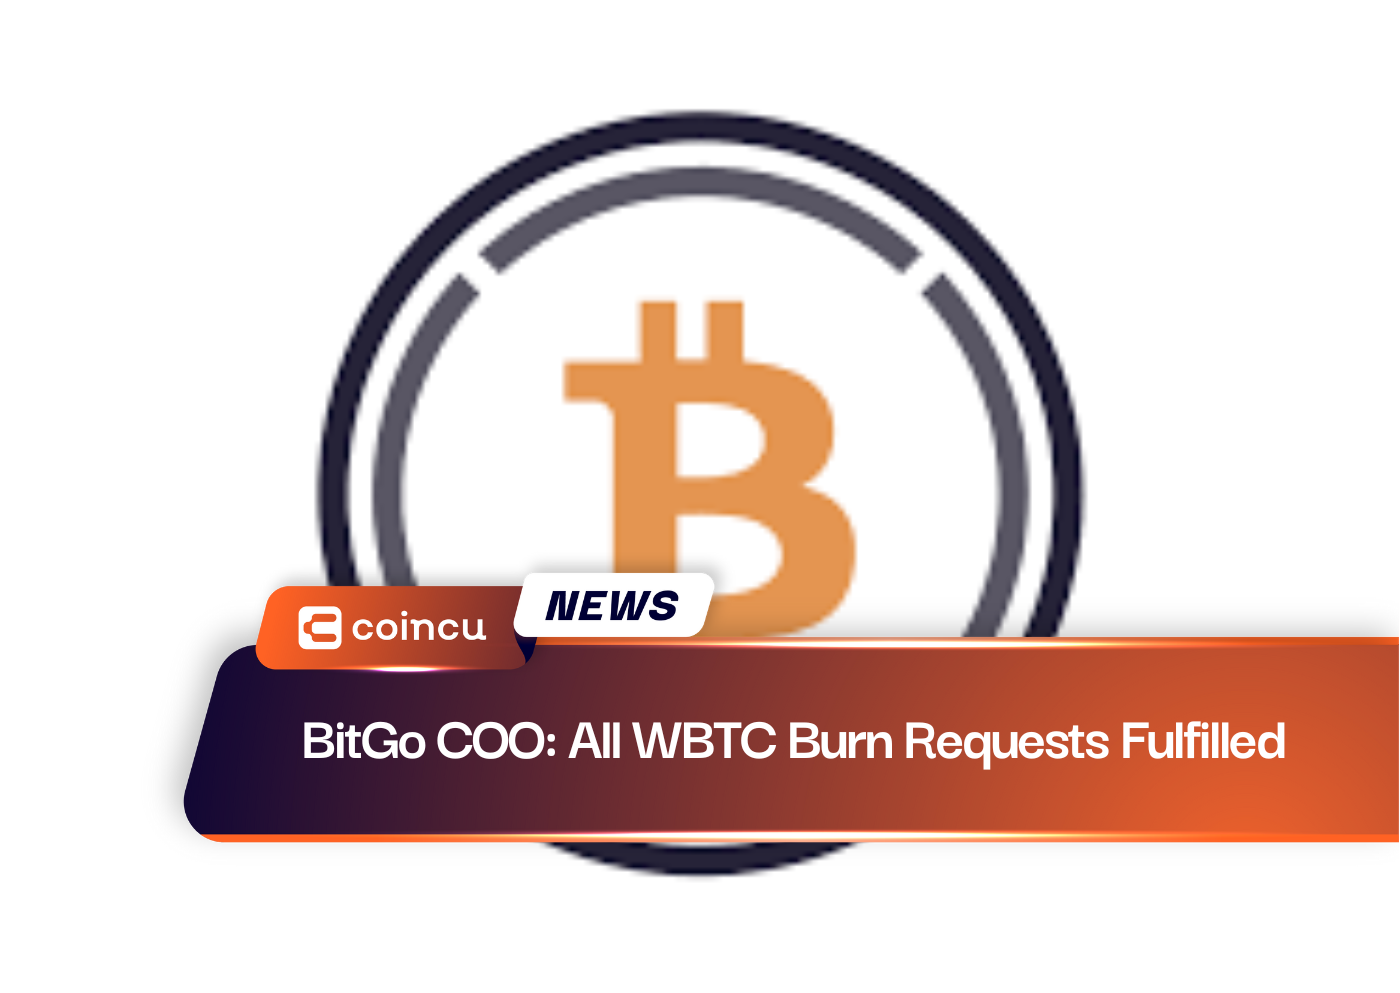 BitGo COO: All WBTC Burn Requests Fulfilled